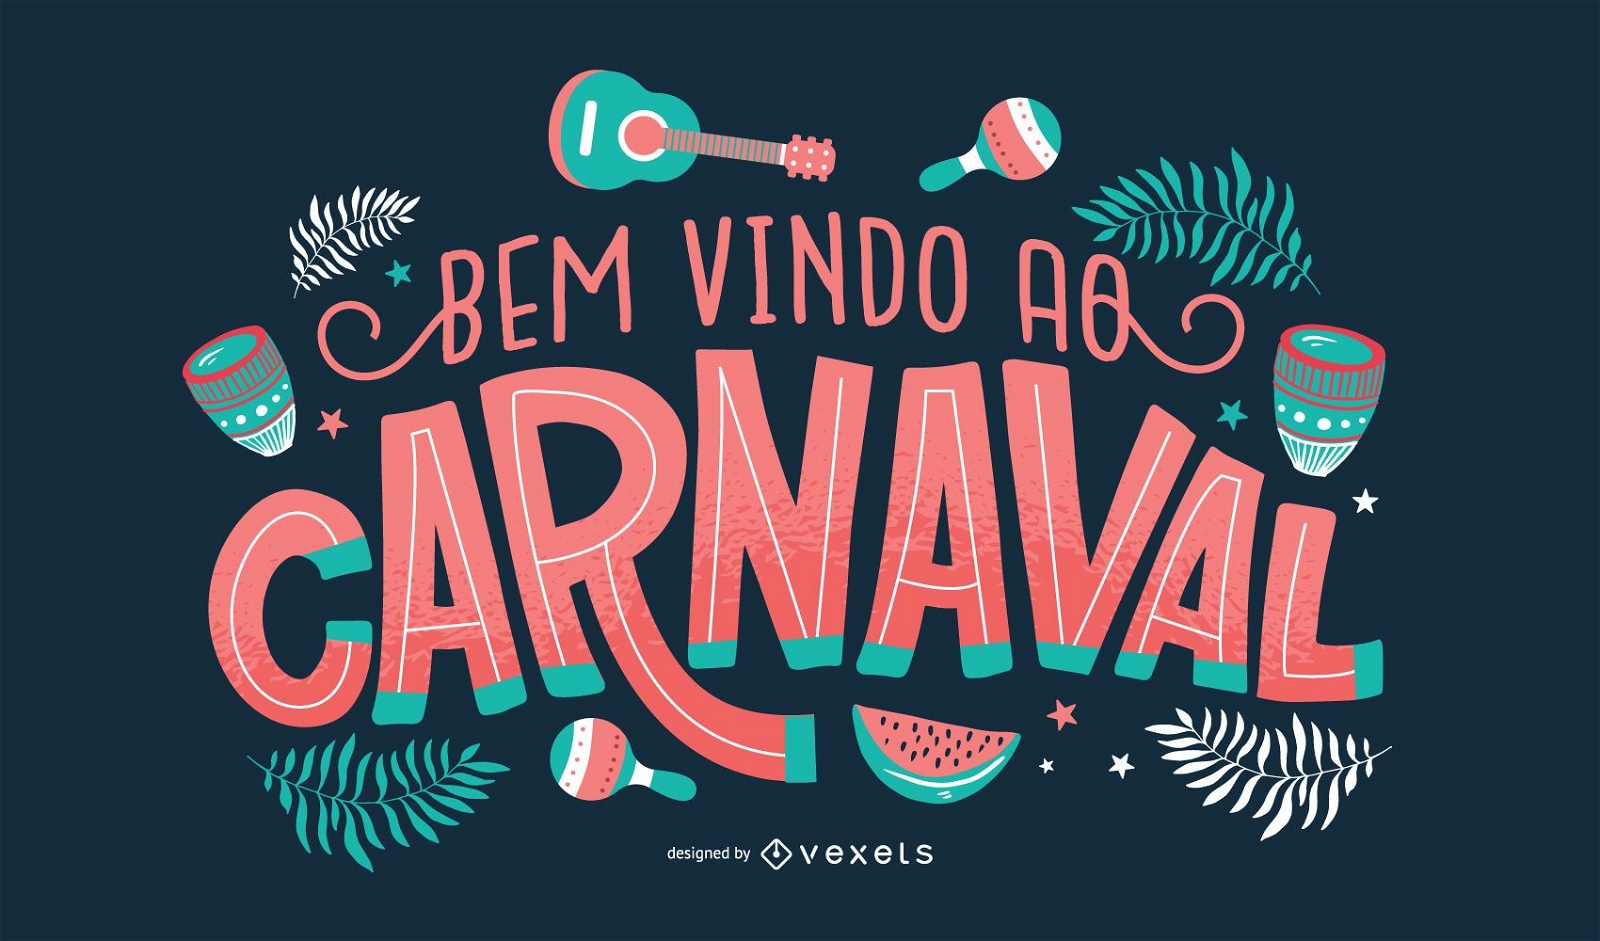 Carnaval Portugu?s Lettering Design